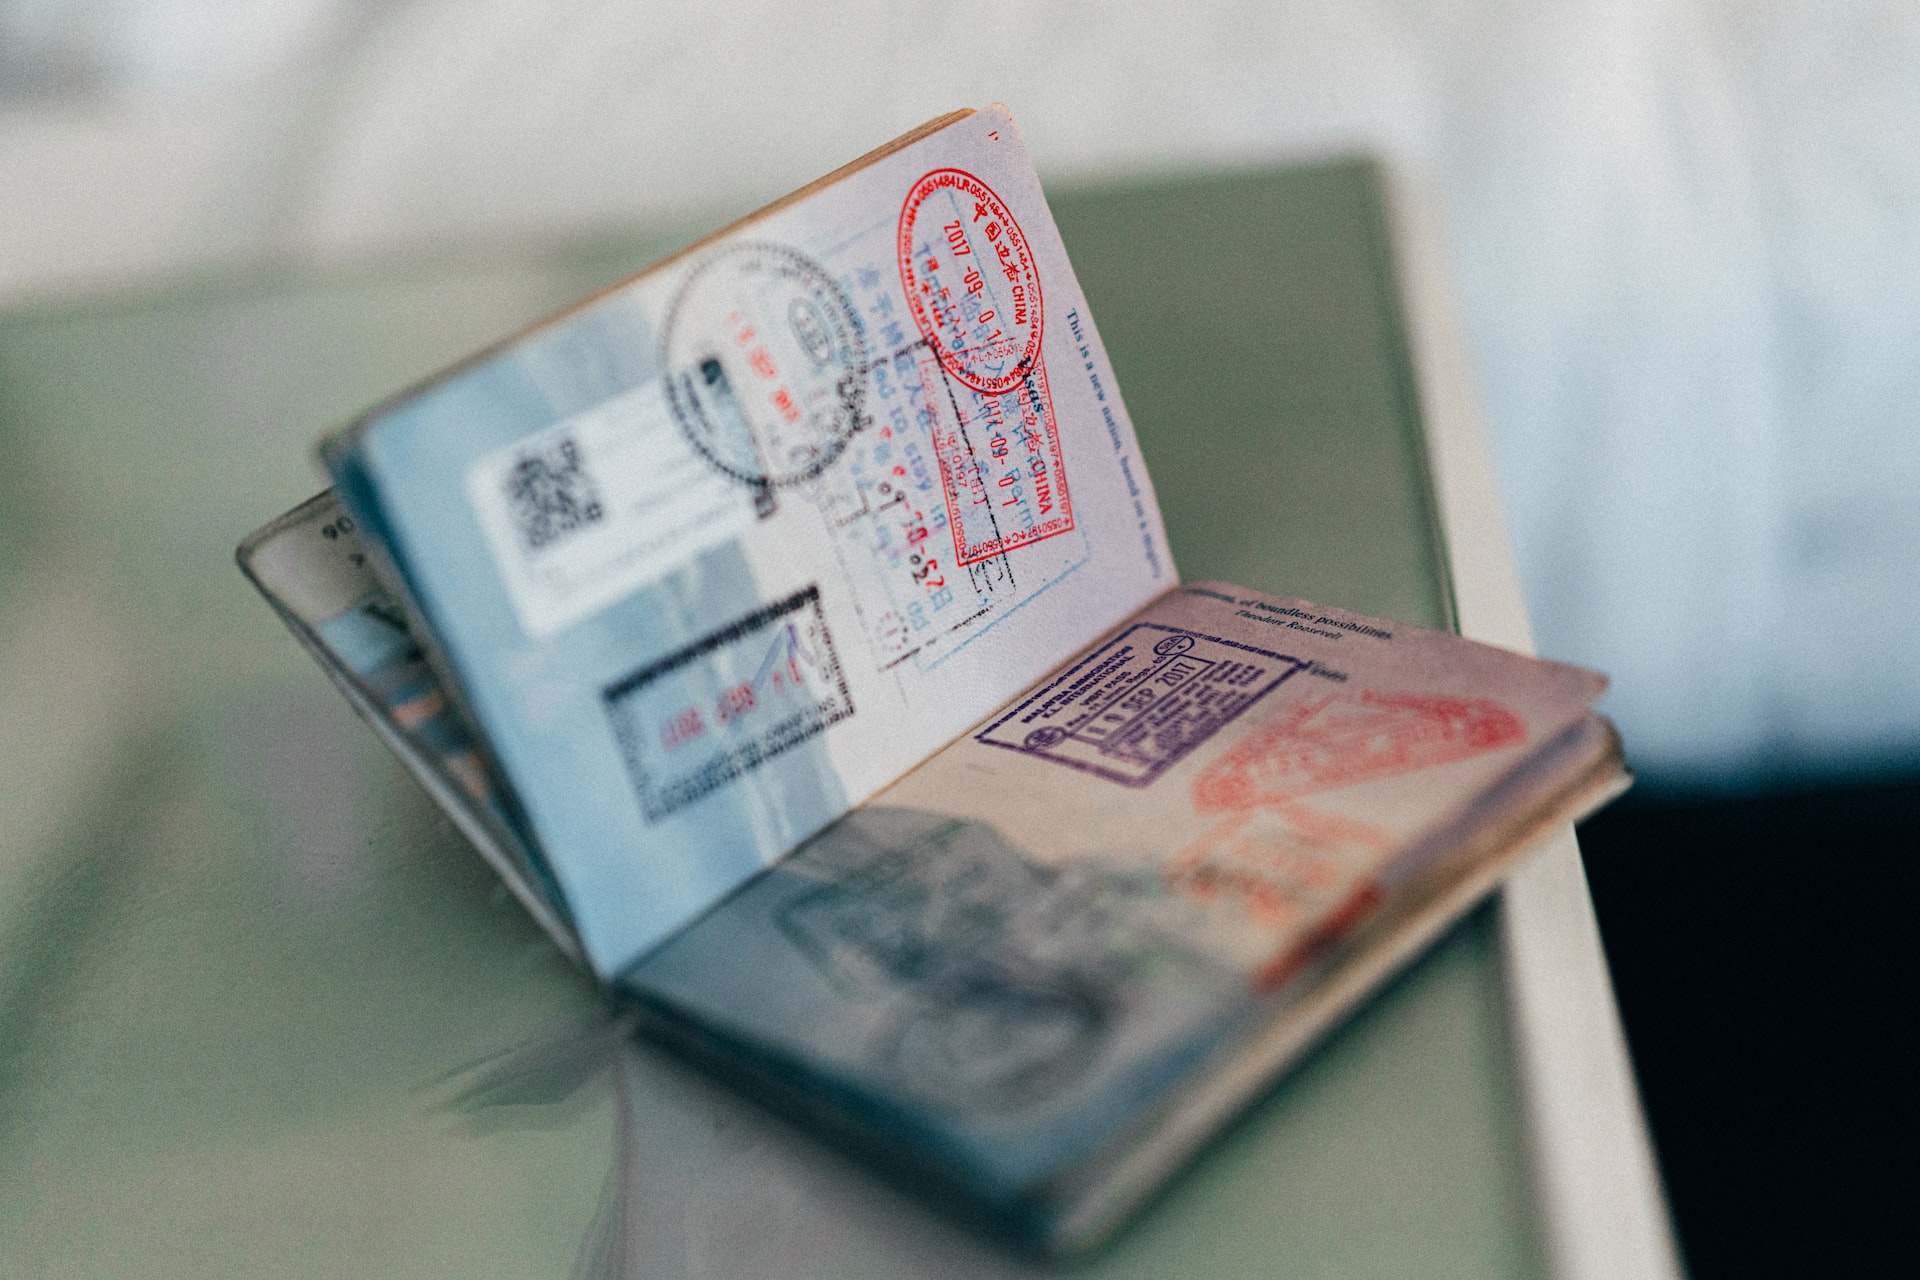 JET Programme - passport